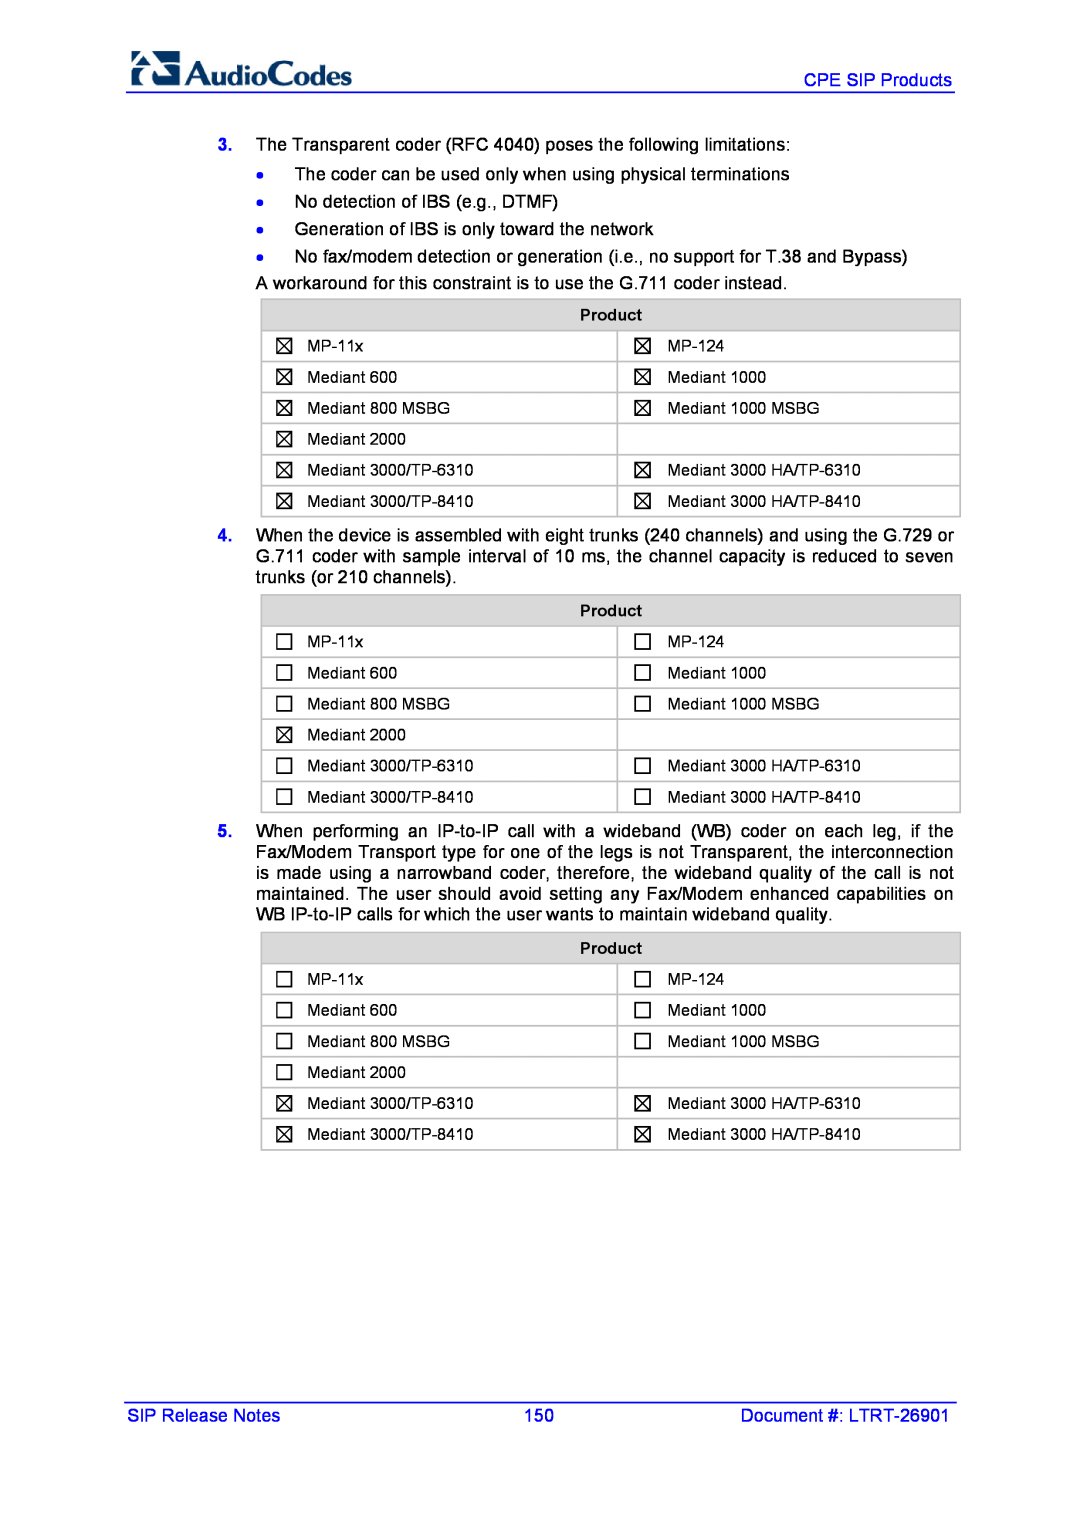 AudioControl VERSION 6.2 manual The Transparent coder RFC 4040 poses the following limitations 